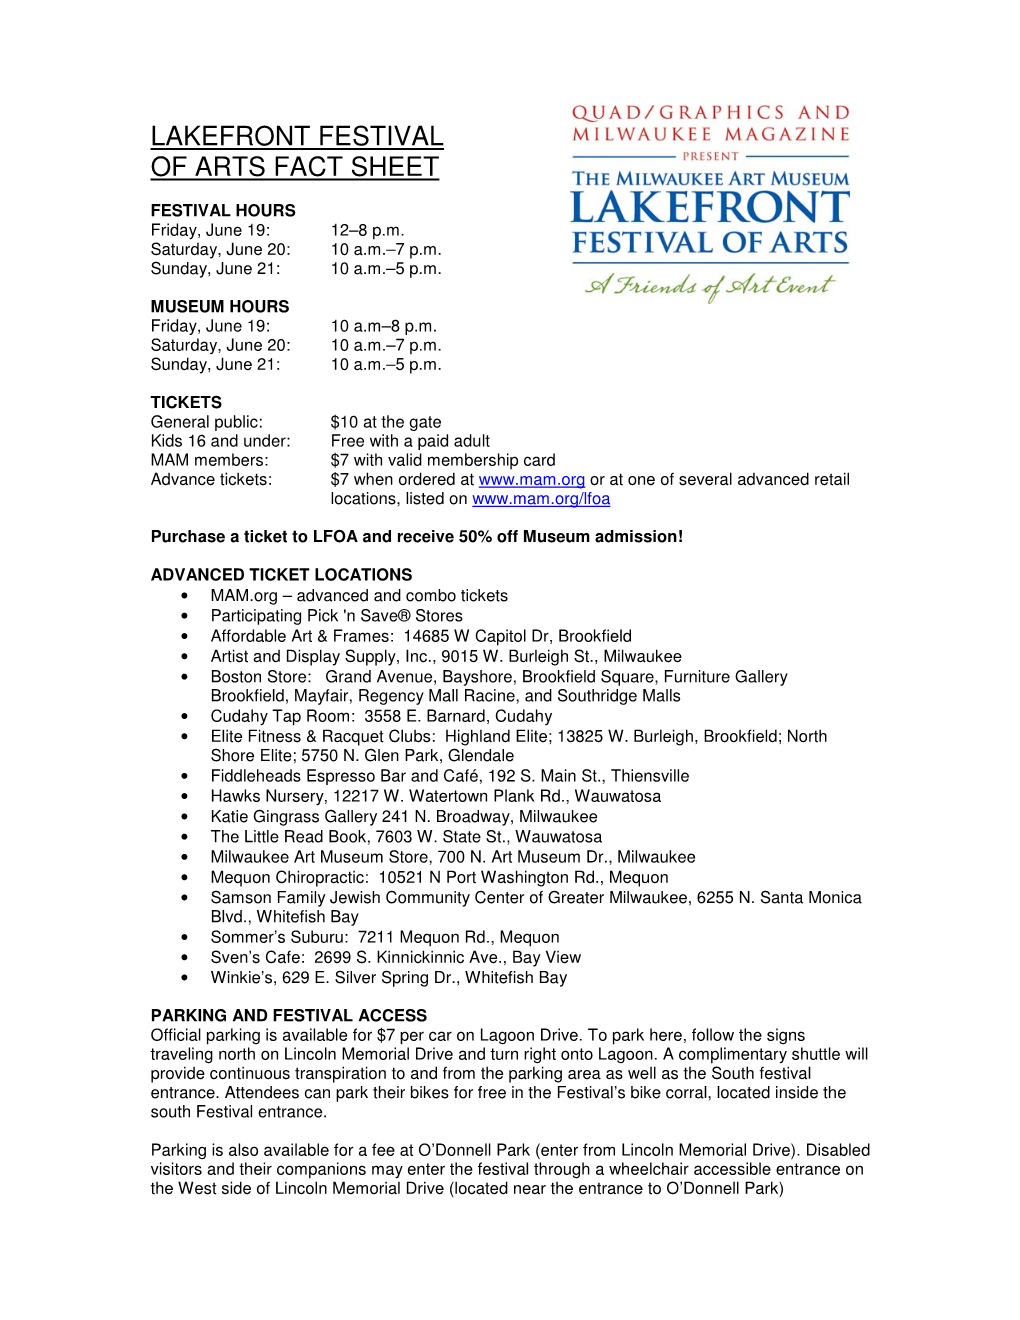 Lakefront Festival of Arts Fact Sheet